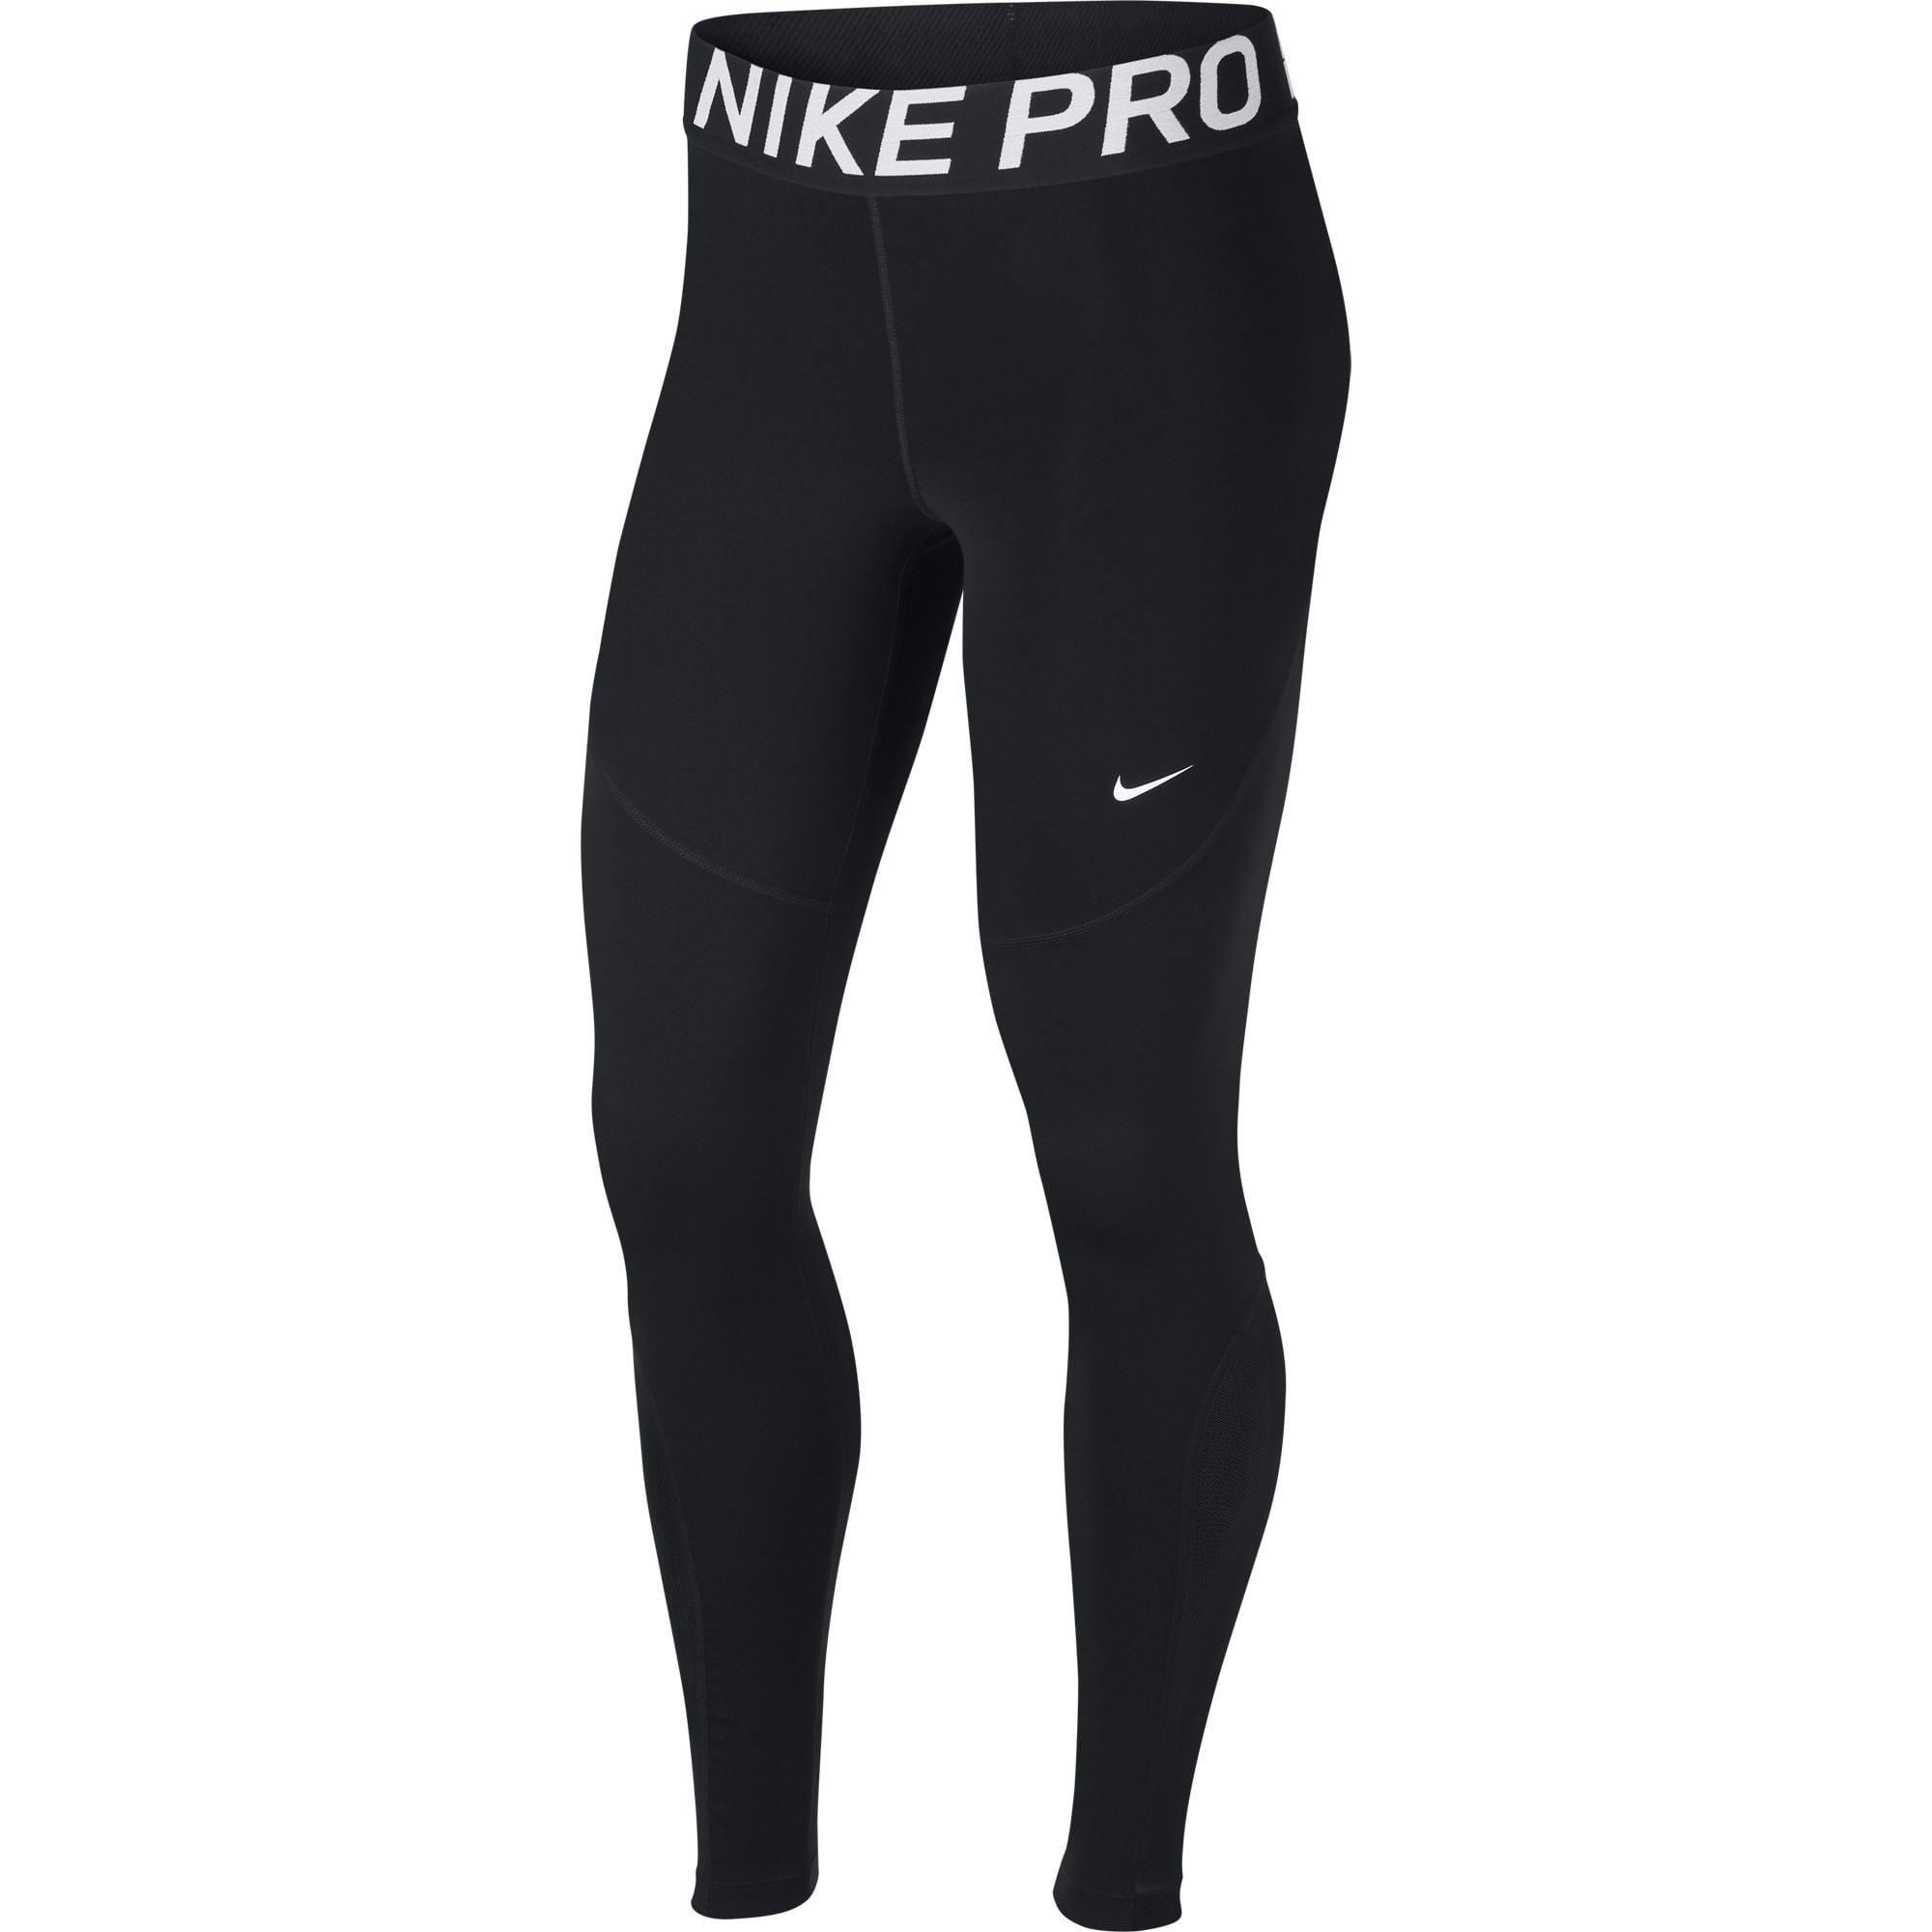 Nike Pro Tights - Walmart 